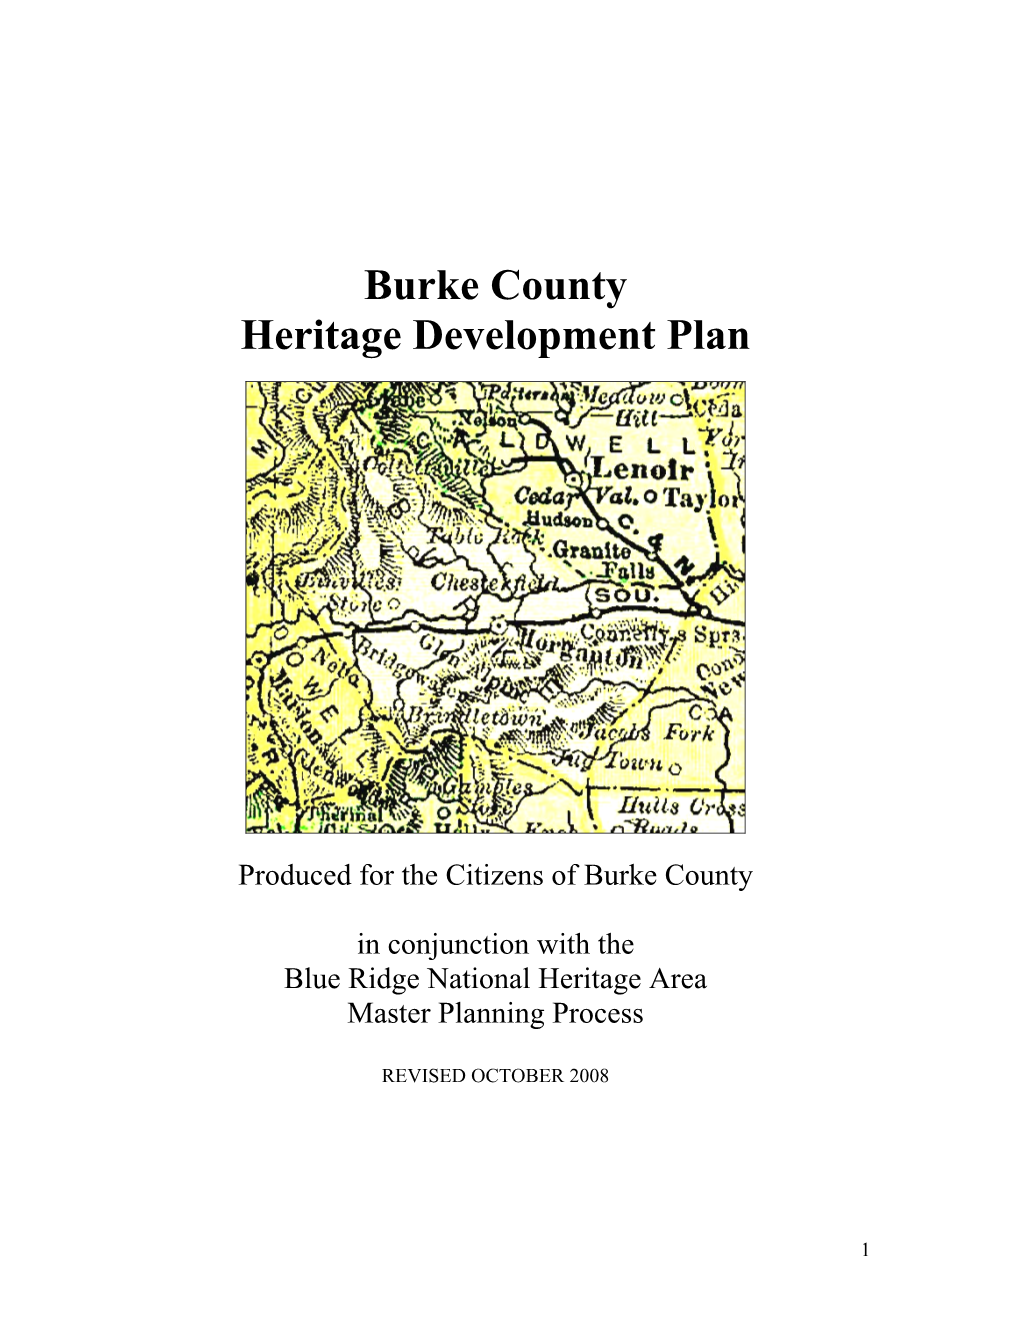 Burke County Heritage Development Plan